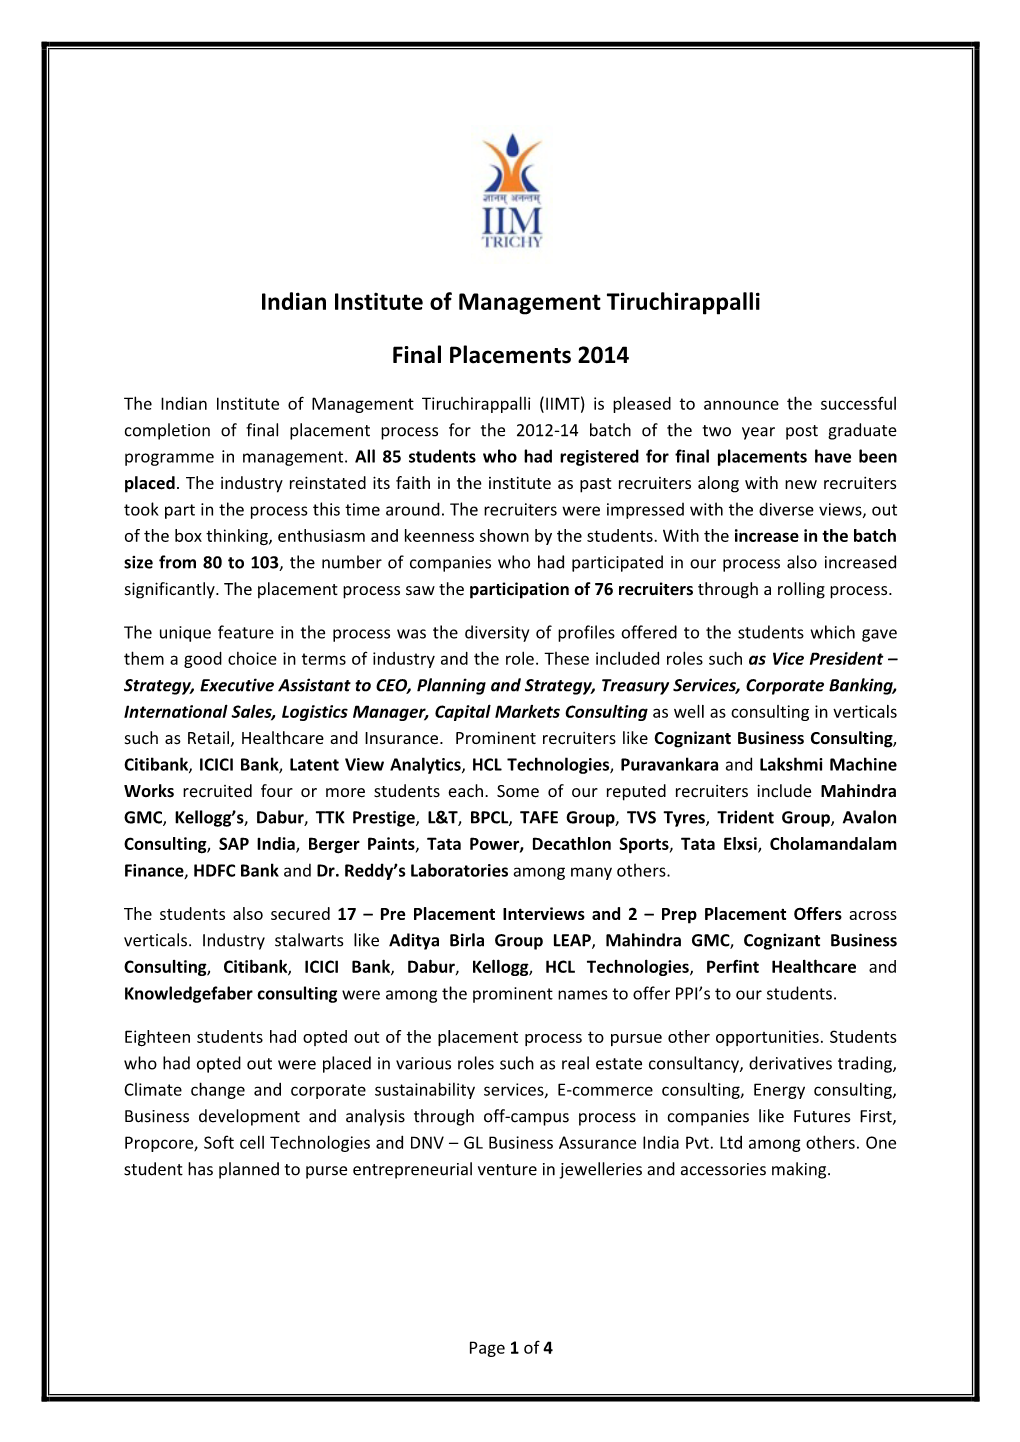 Indian Institute of Management Tiruchirappalli Final Placements 2014